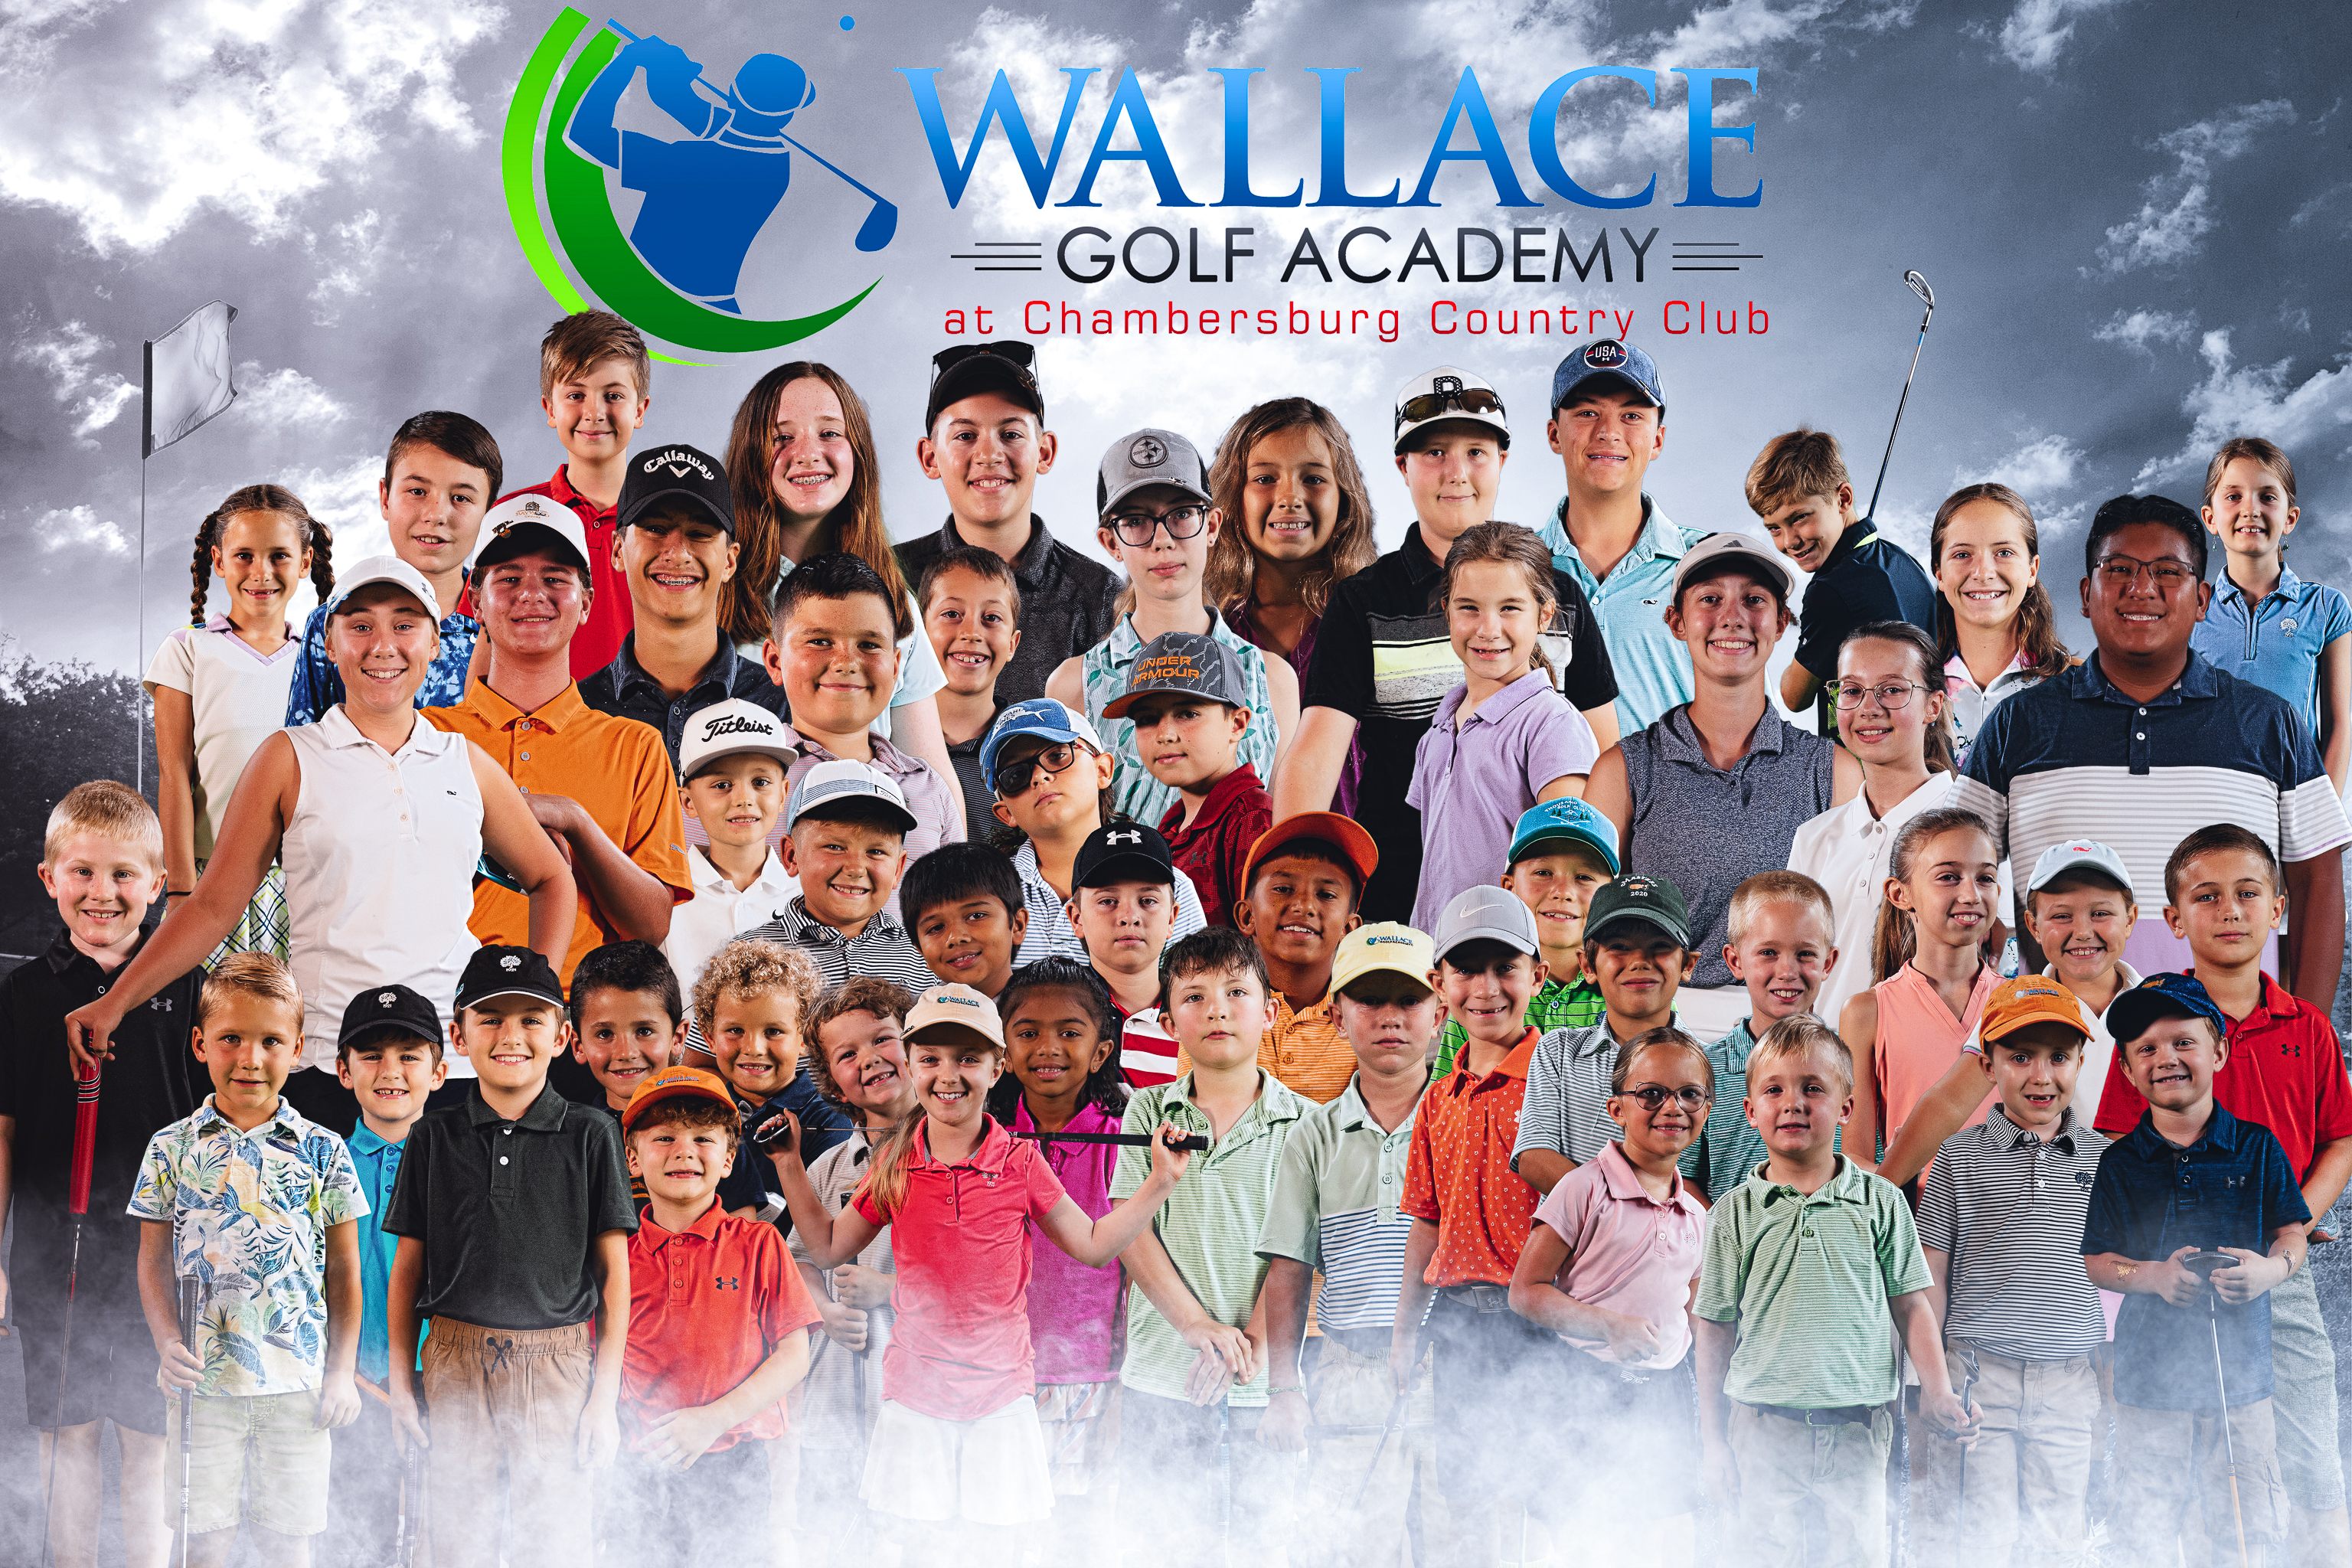 Future Champions Junior Golf Tour- Official Site- Tournaments, Camps,  Lessons